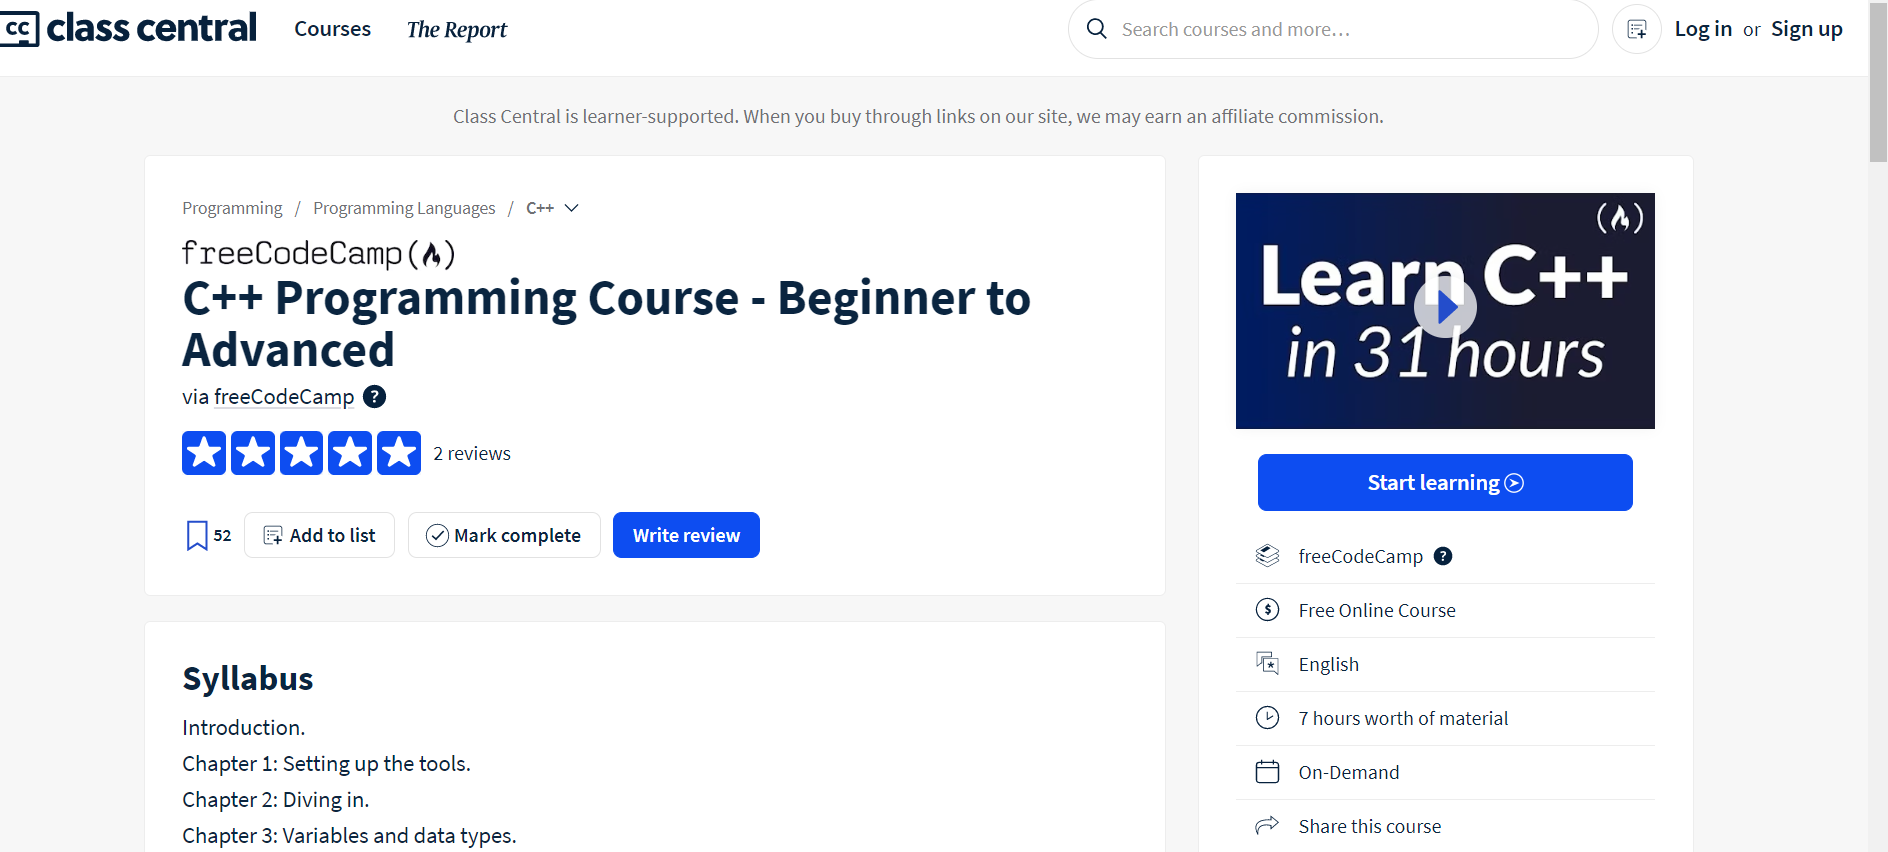 Best Online Course for C Programming, Learn C Programming from Expert  Teacher